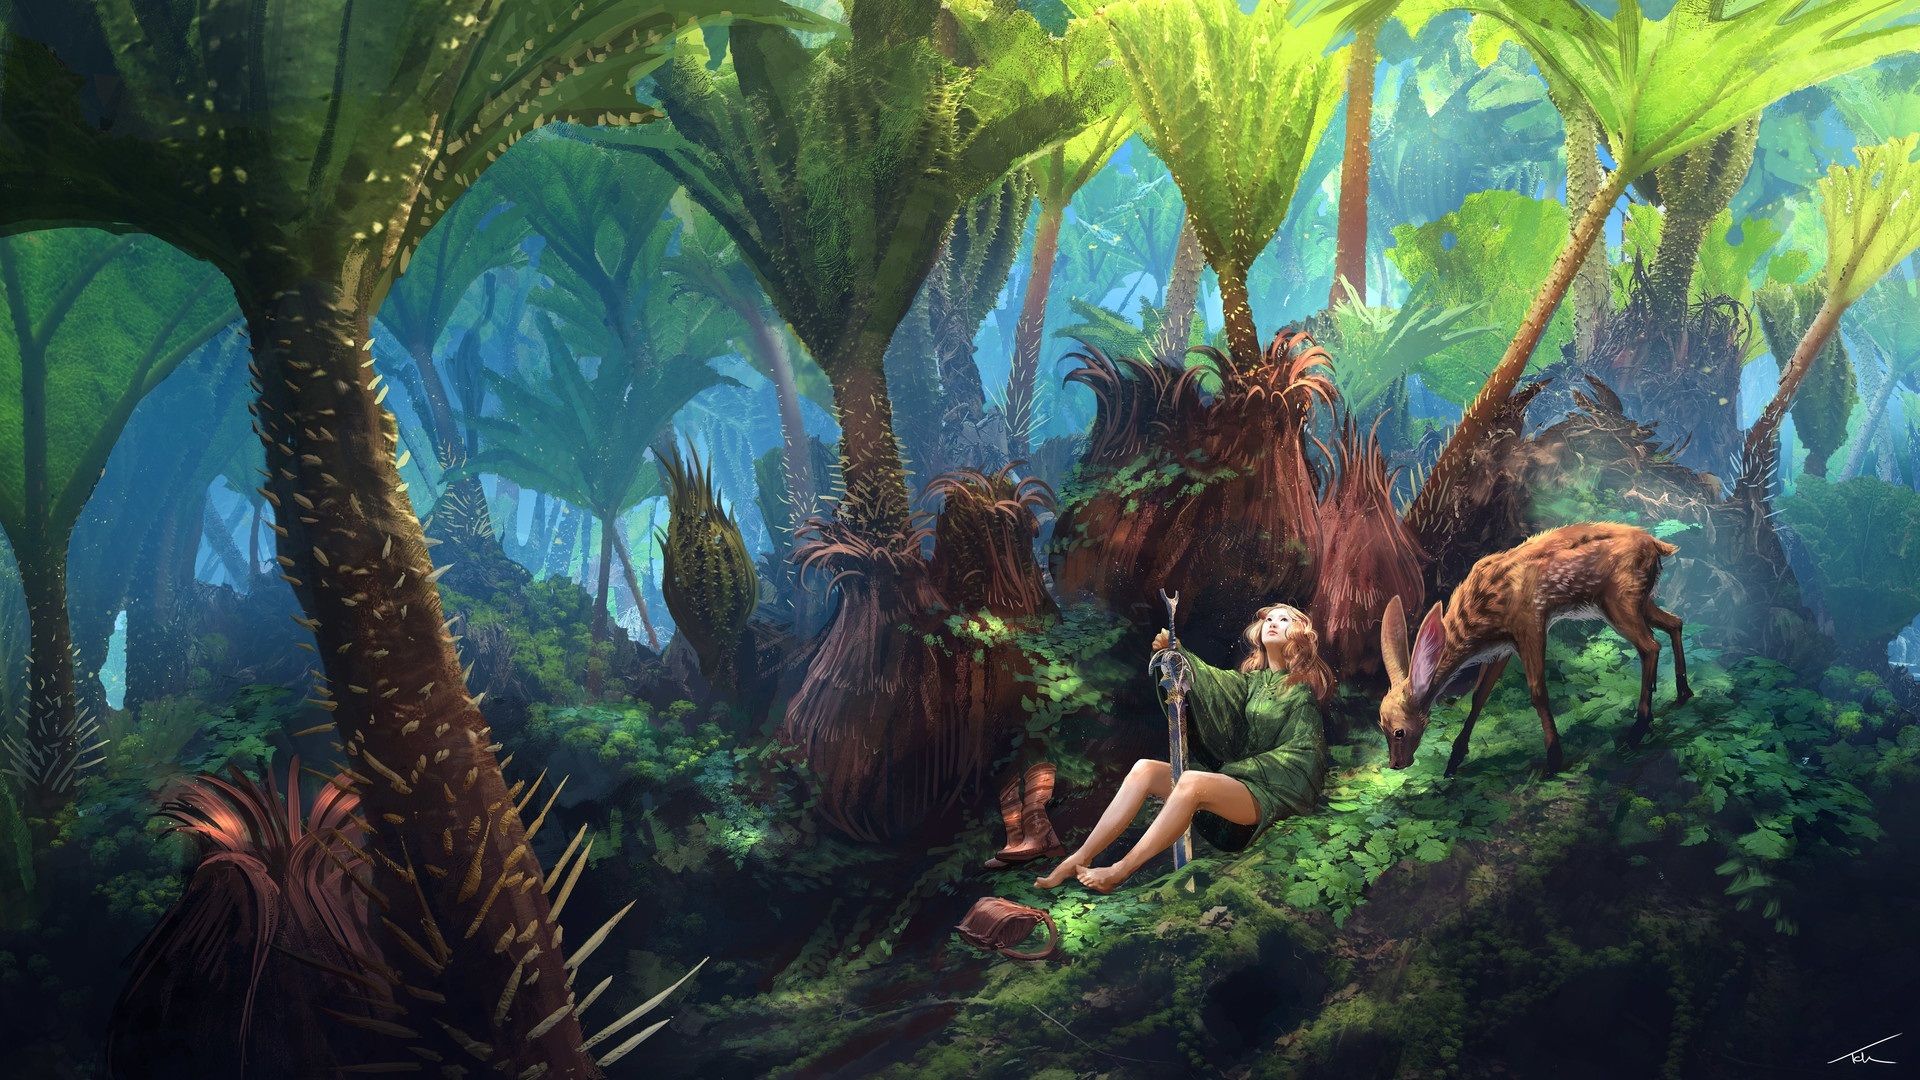 Wallpaper Fantasy art, girl, sword, deer, forest, green, painting 1920x1080 Full HD 2K Picture, Image